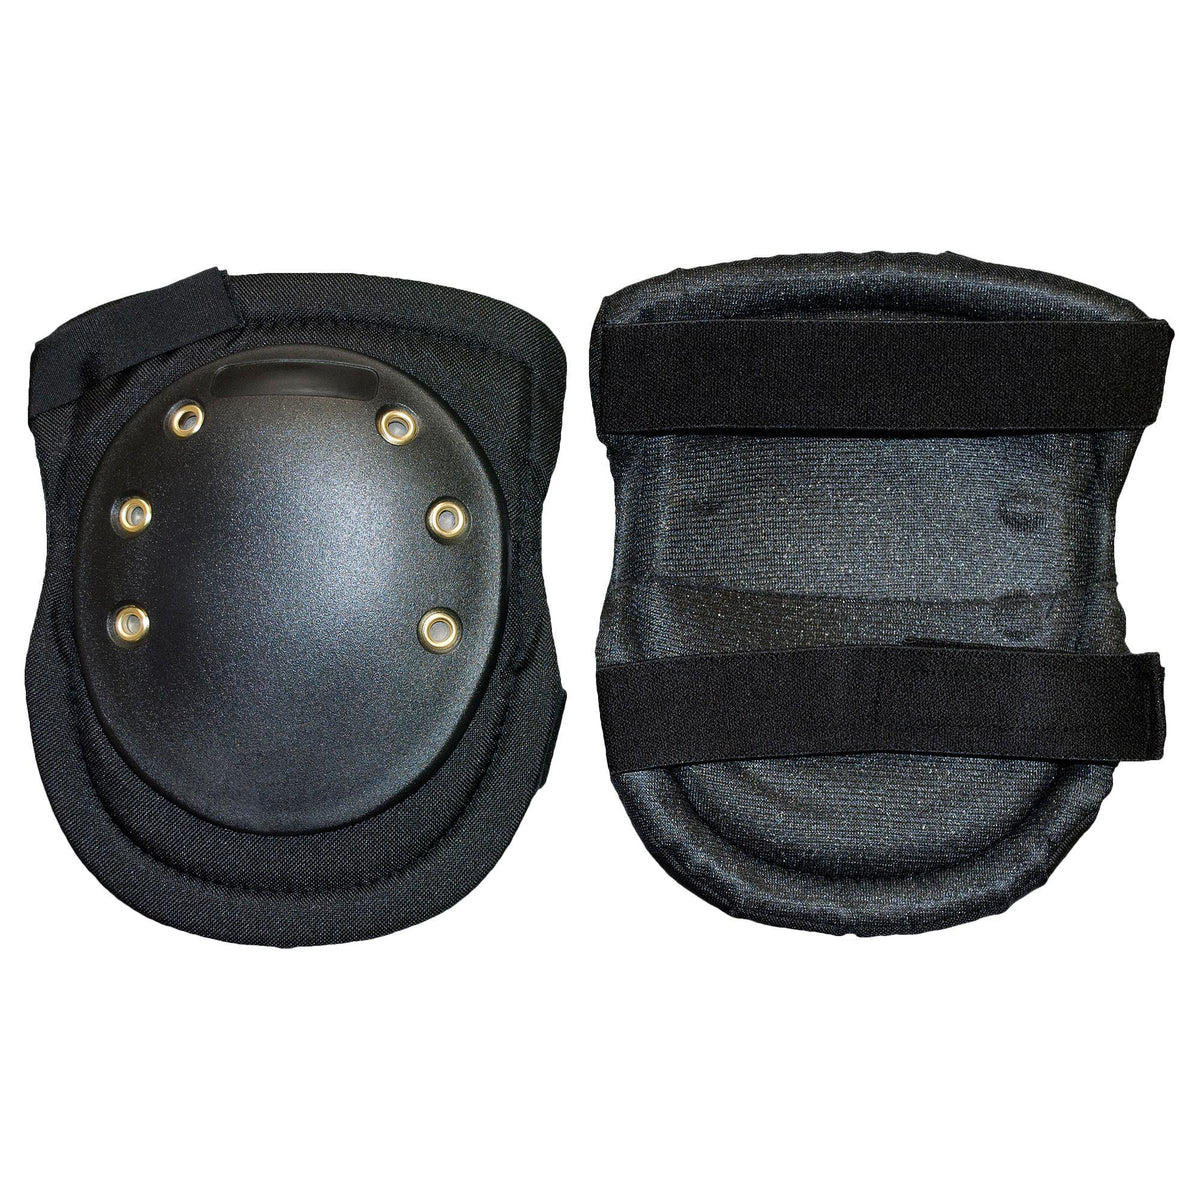 Black Knee Pads with Hard Shell - W-WEL14758BK